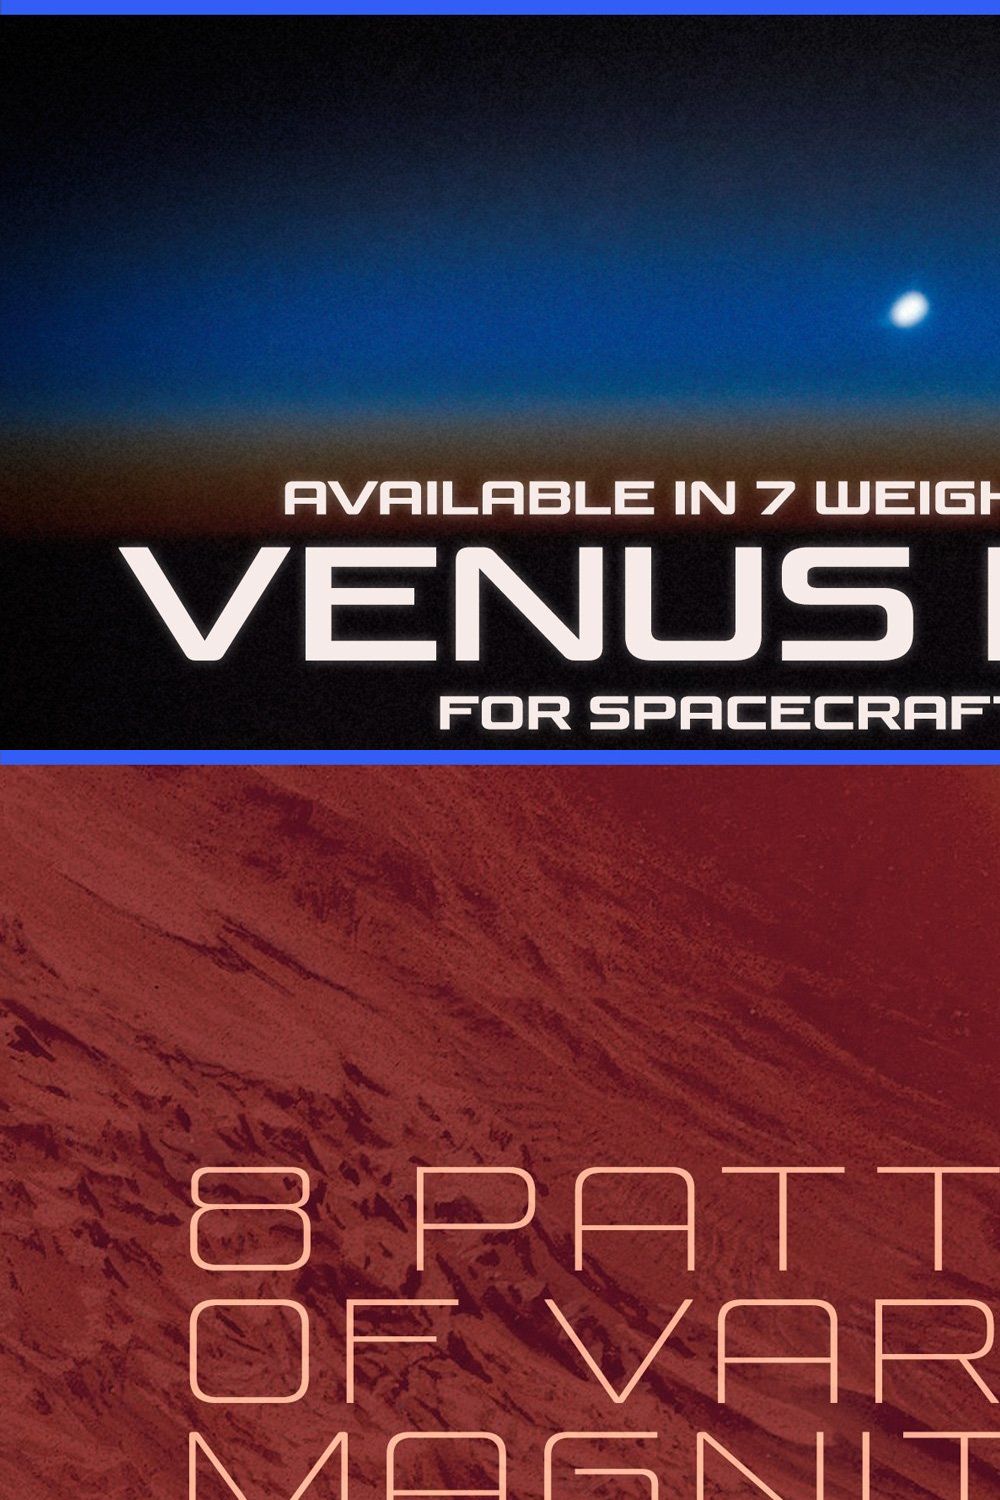 Venus Rising pinterest preview image.